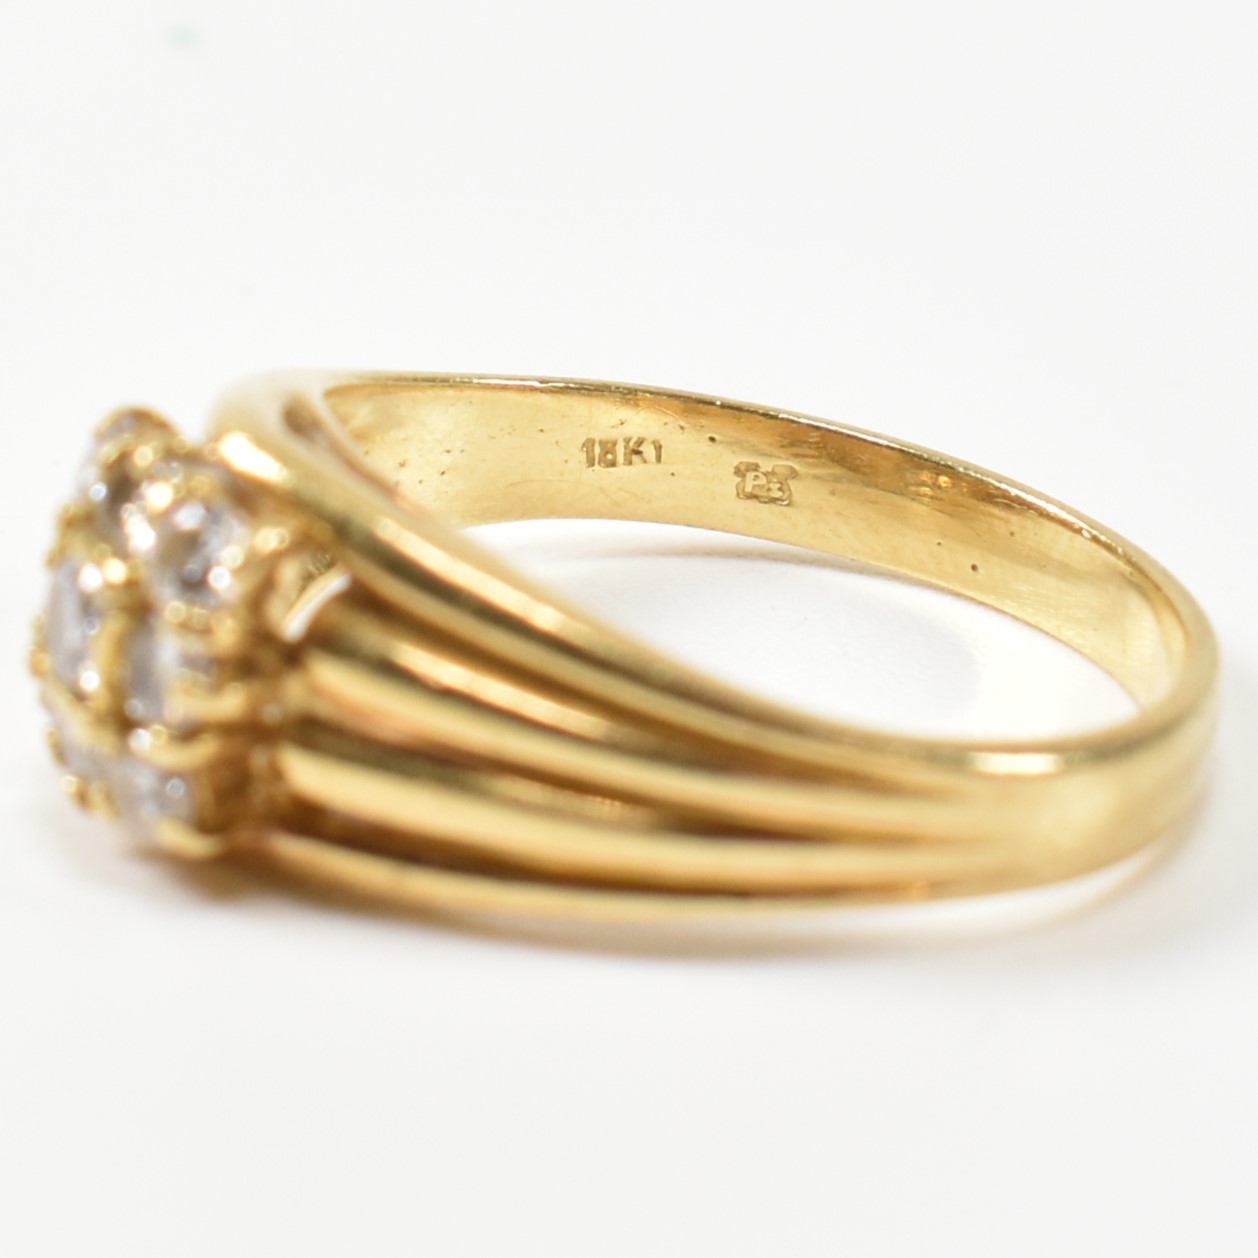 HALLMARKED 18CT GOLD & DIAMOND SIGNET RING - Image 10 of 11